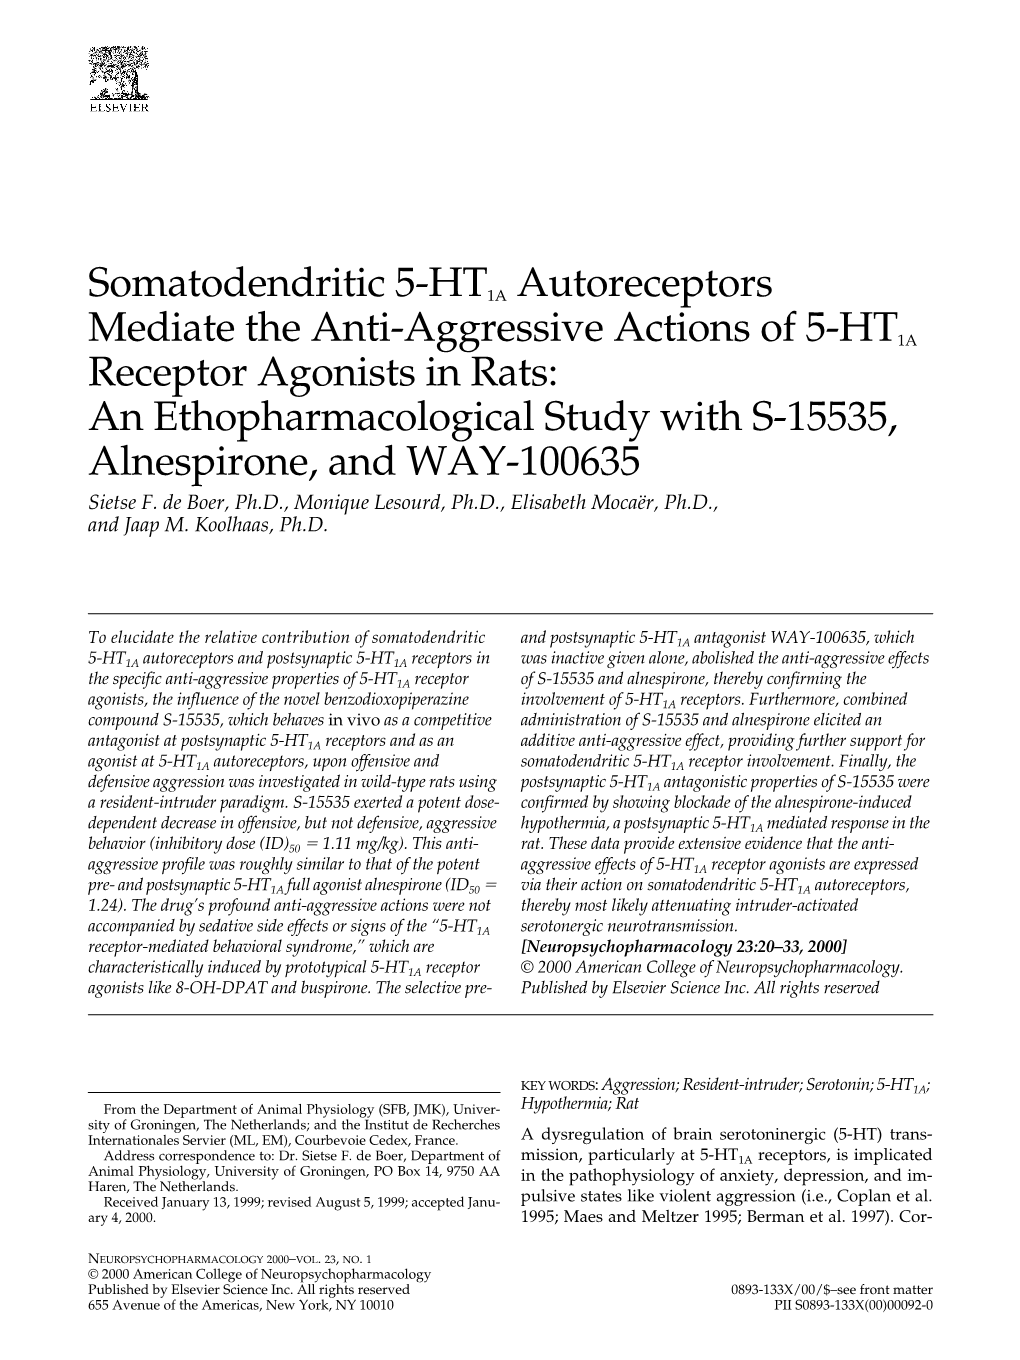 Somatodendritic 5-HT1A Autoreceptors Mediate The